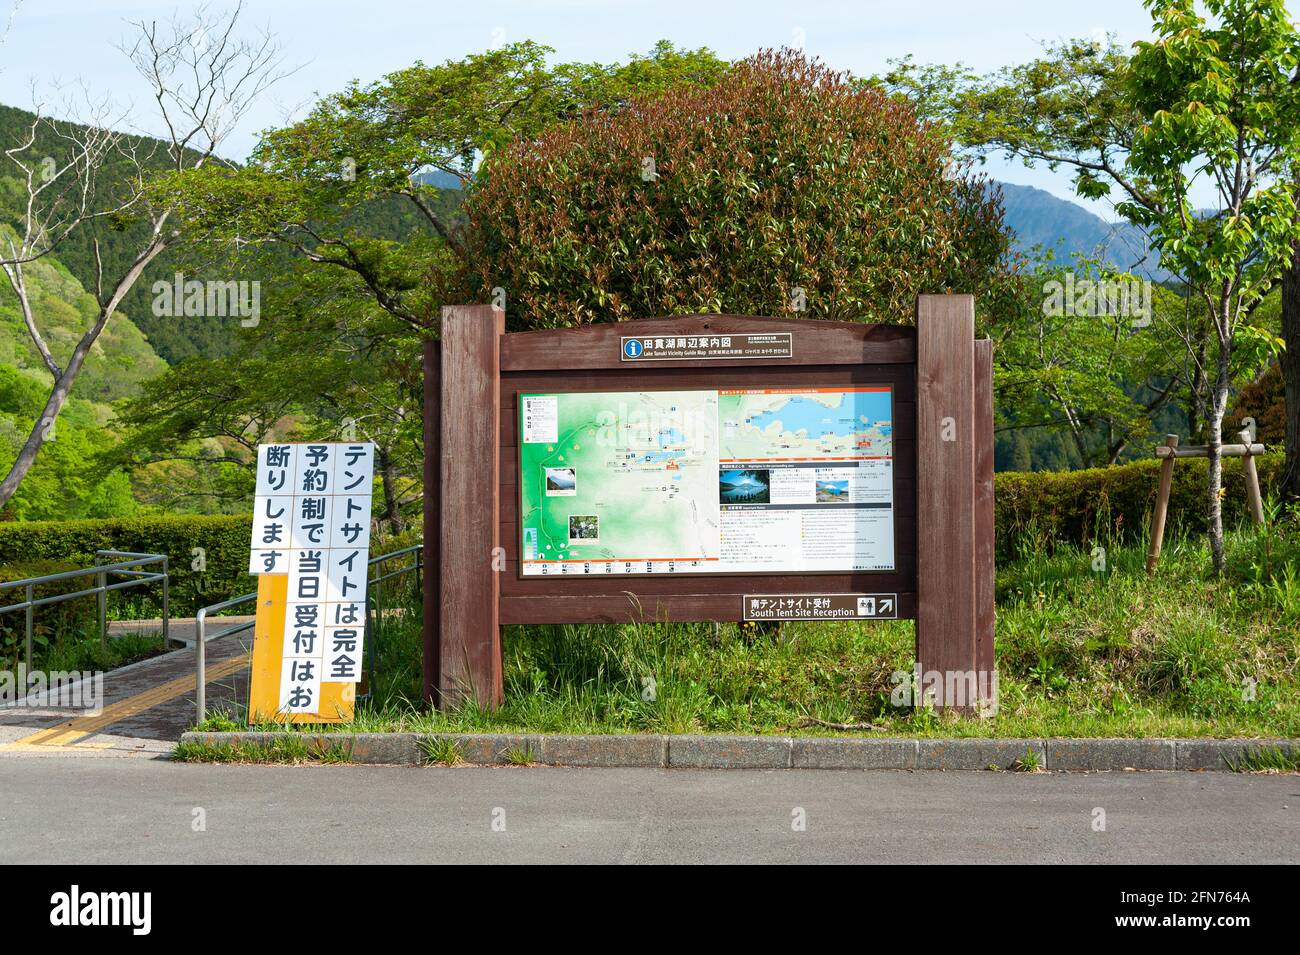 Lake Tanuki Umgebung Guide Karte. Holzplatte. Fuji-Hakone-Izu-Nationalpark. Tanuki-Campingplatz am See in Fujinomiya, Präfektur Shizuoka, Japan. Stockfoto